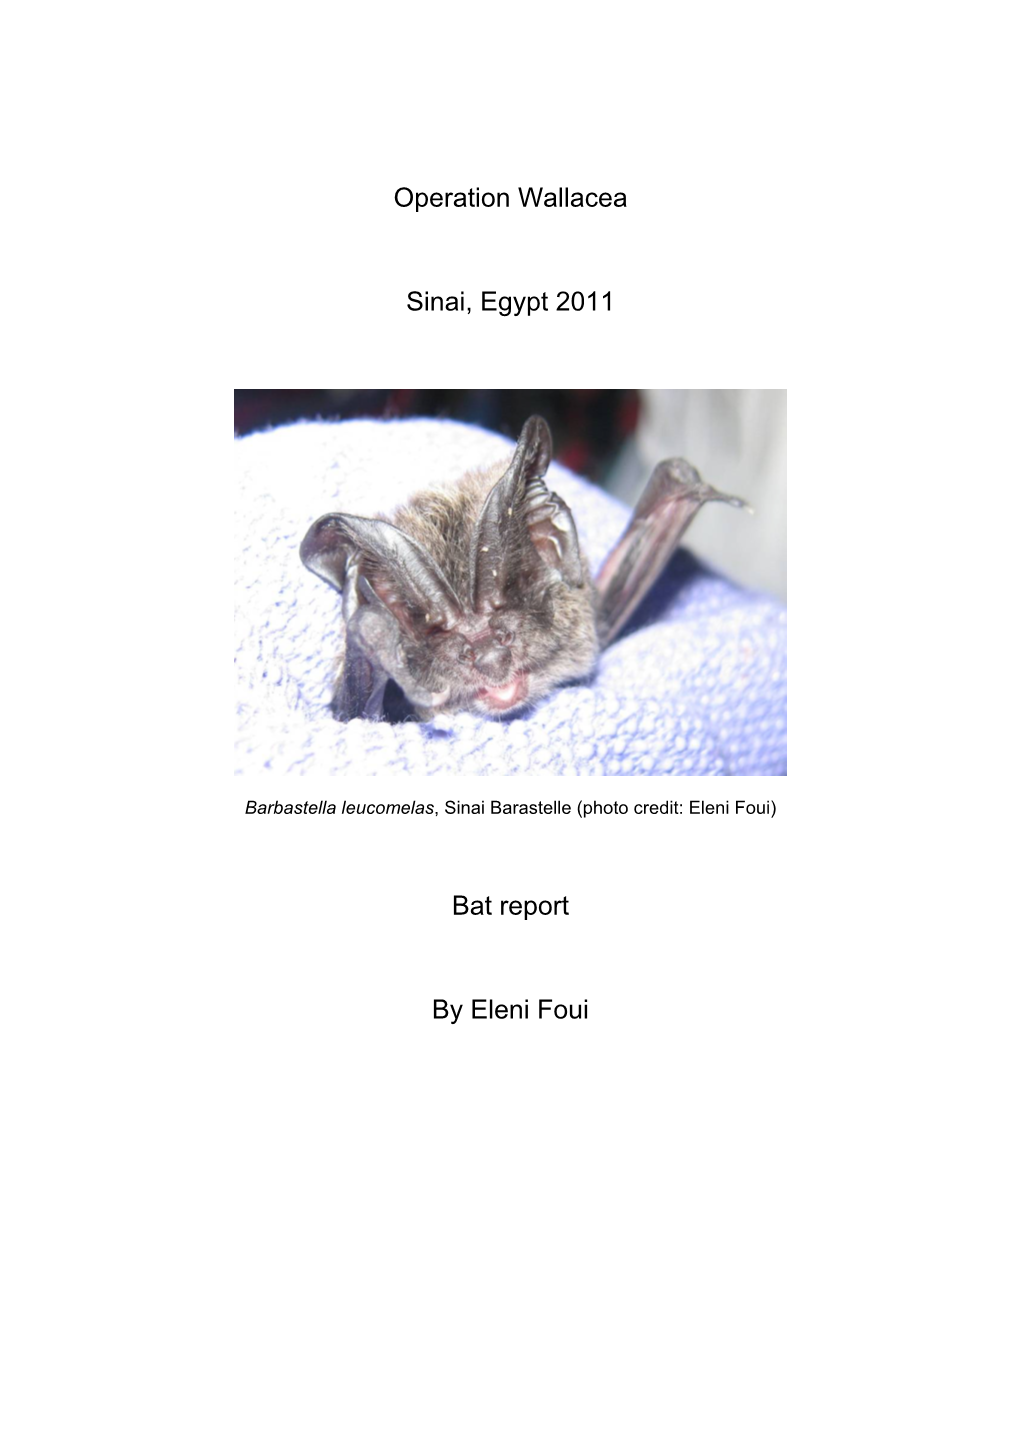 Operation Wallacea Sinai, Egypt 2011 Bat Report by Eleni Foui